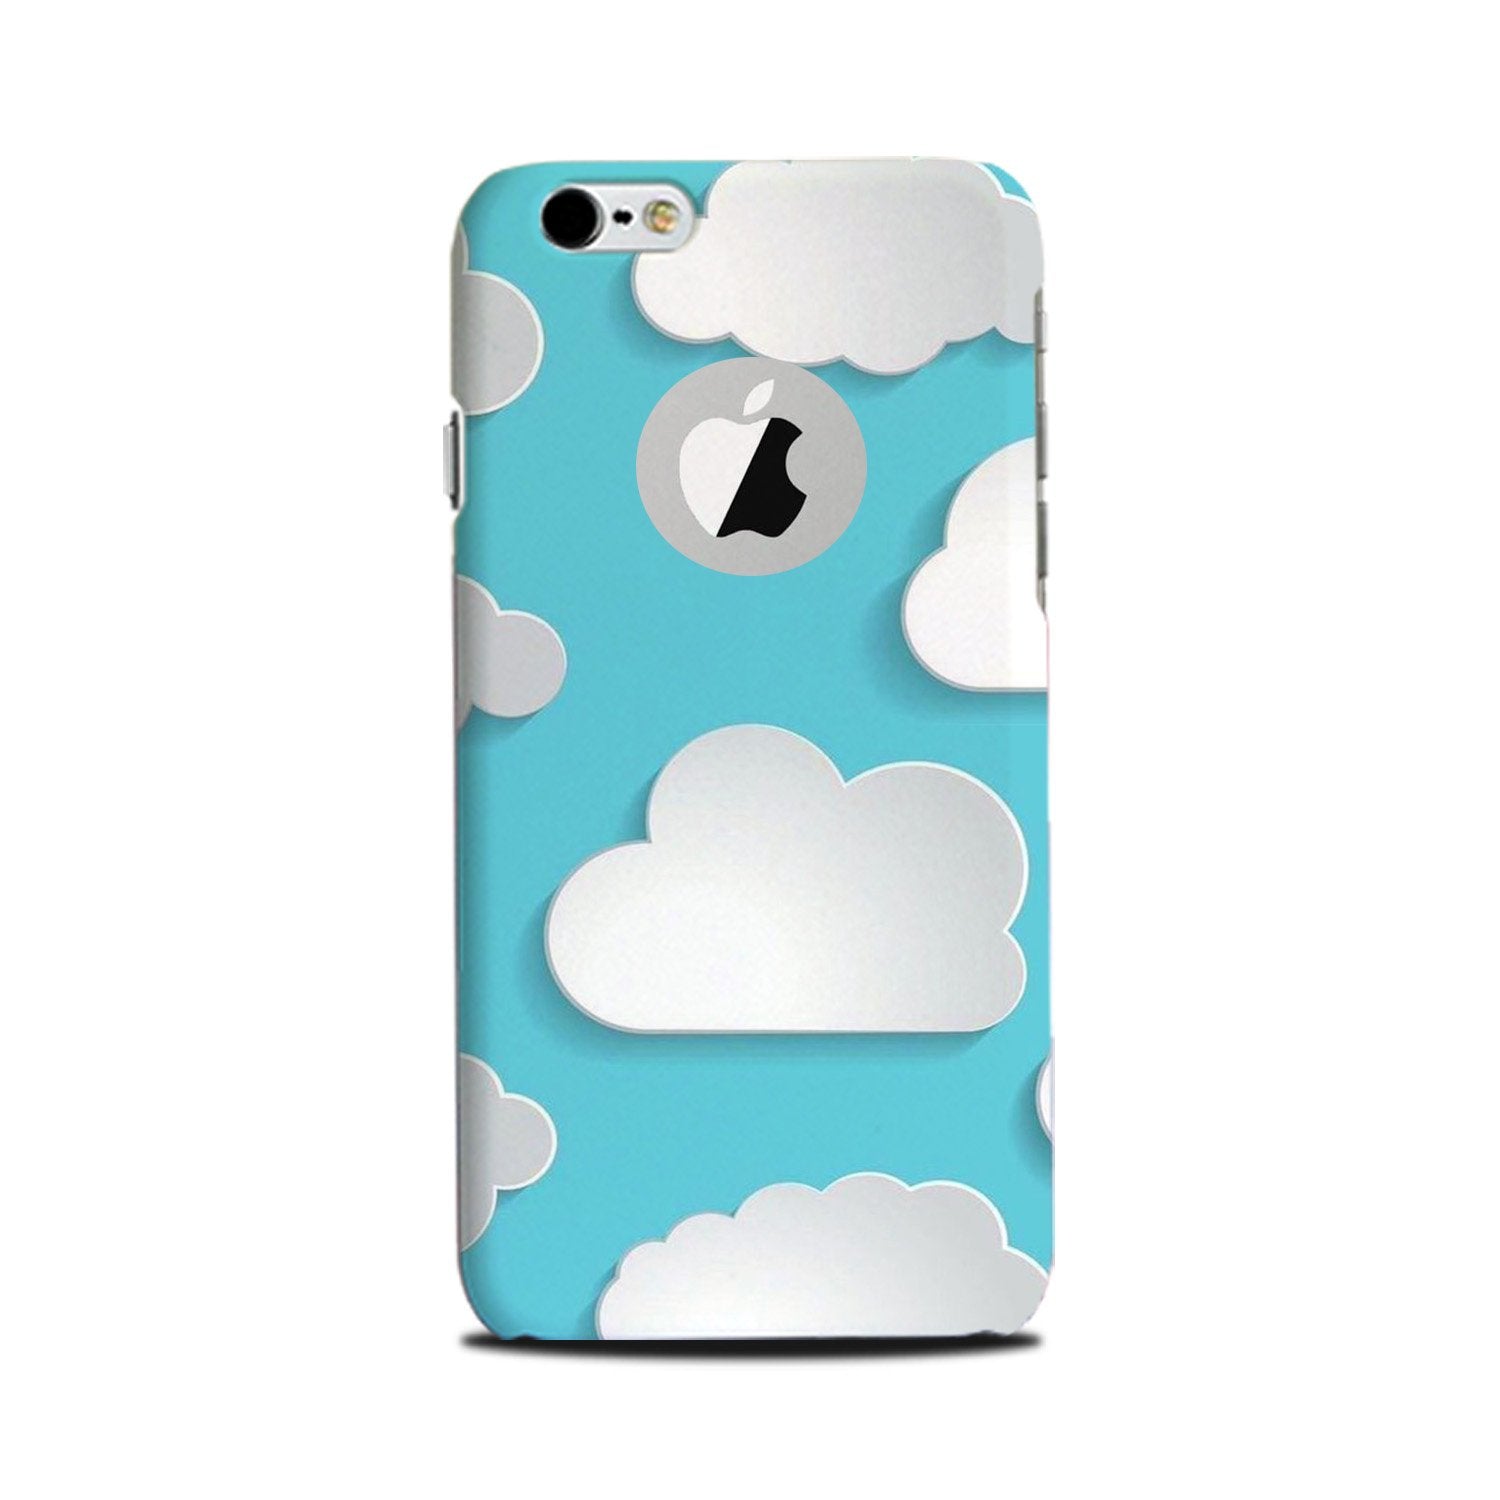 Clouds Case for iPhone 6 Plus / 6s Plus logo cut  (Design No. 210)